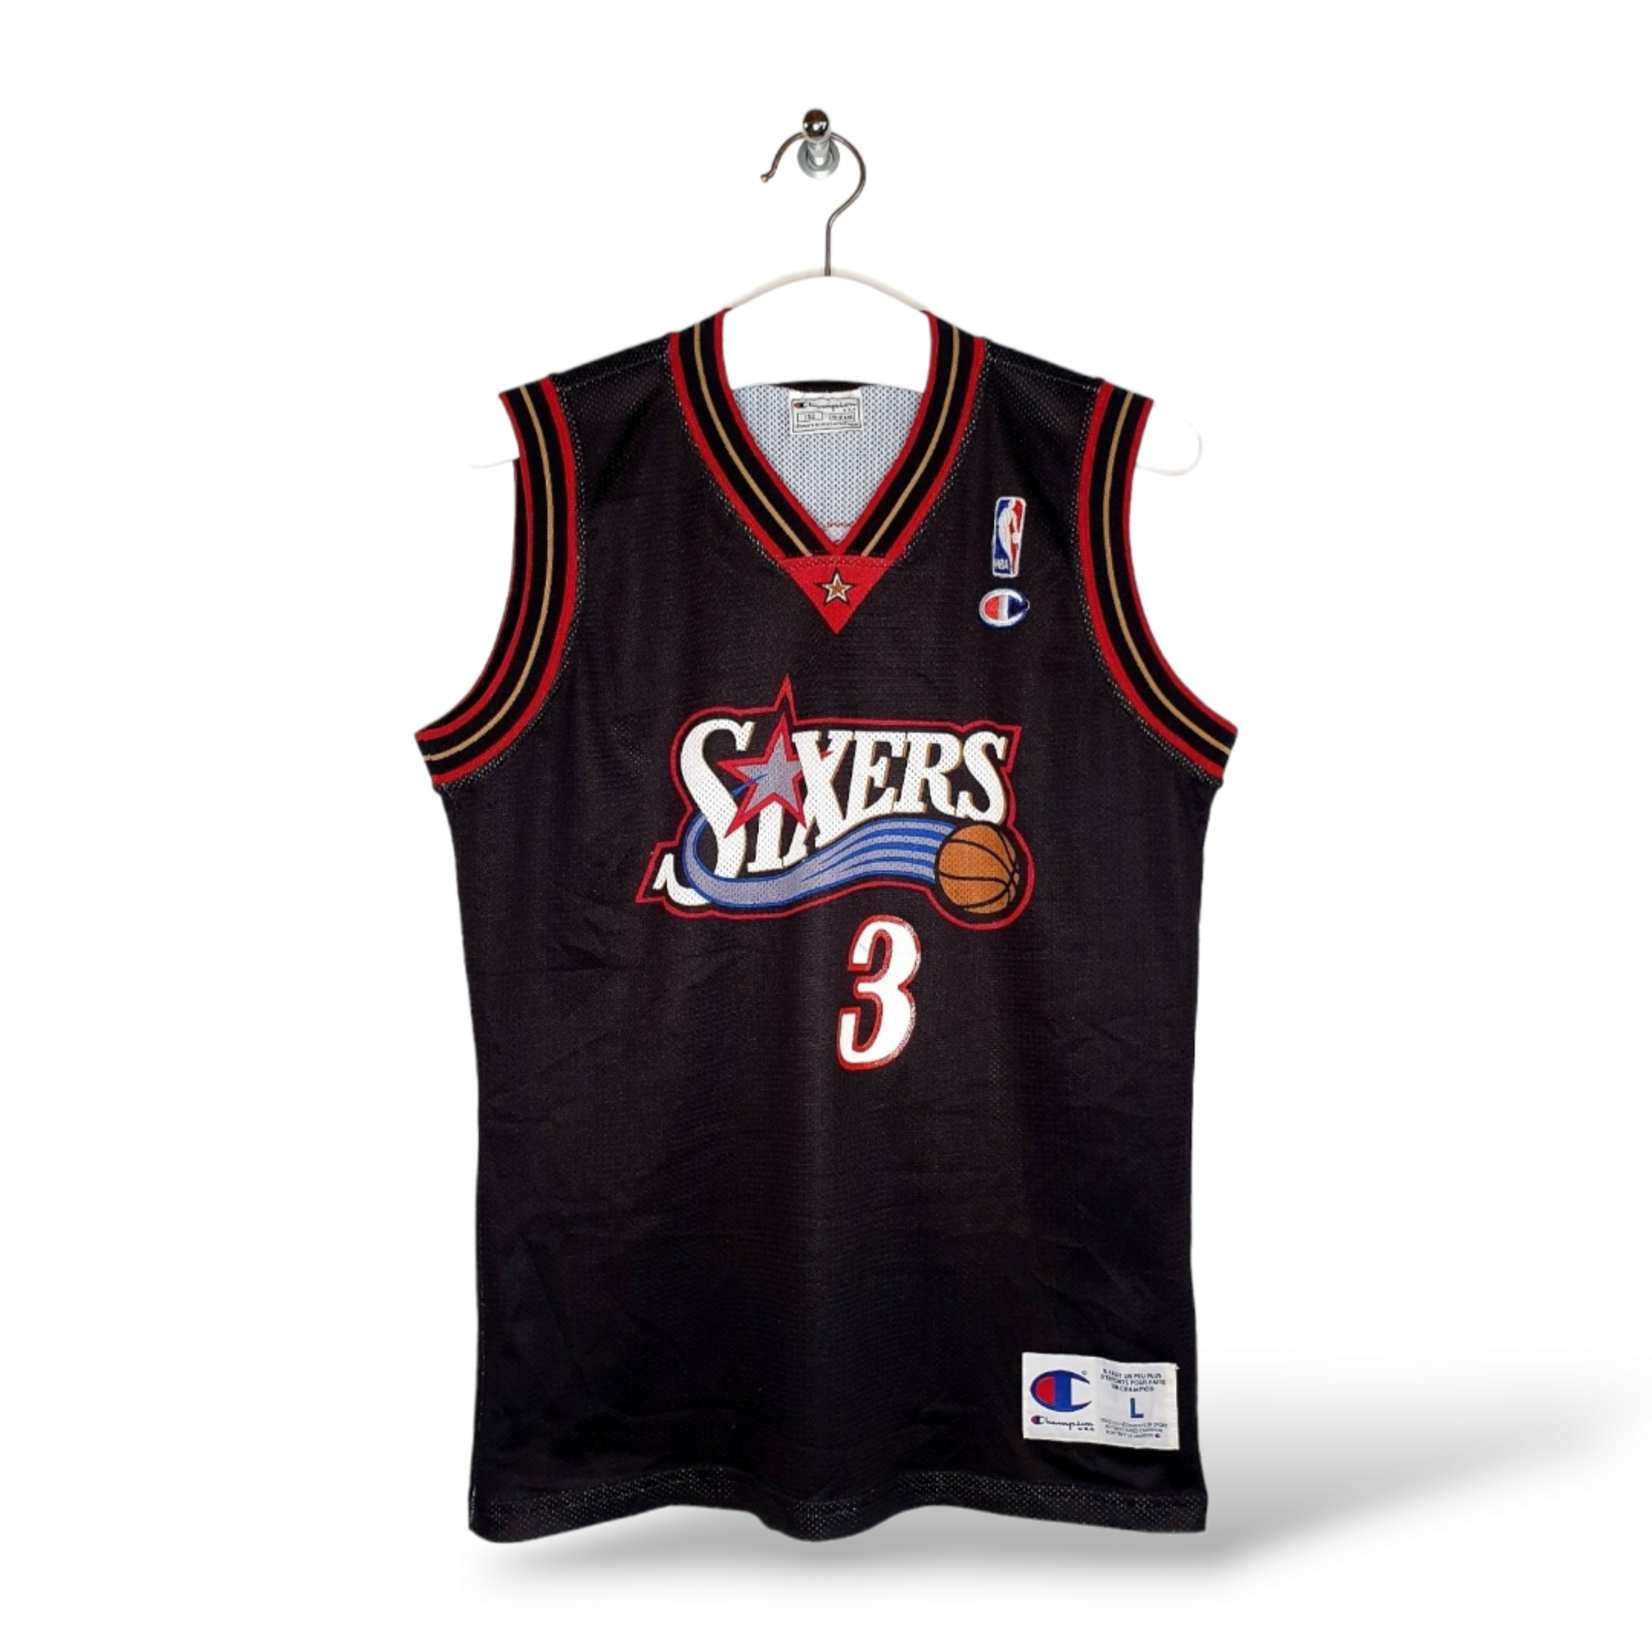 Champion Origineel Champion NBA basketbal shirt Philadelphia 76ers 2005/06